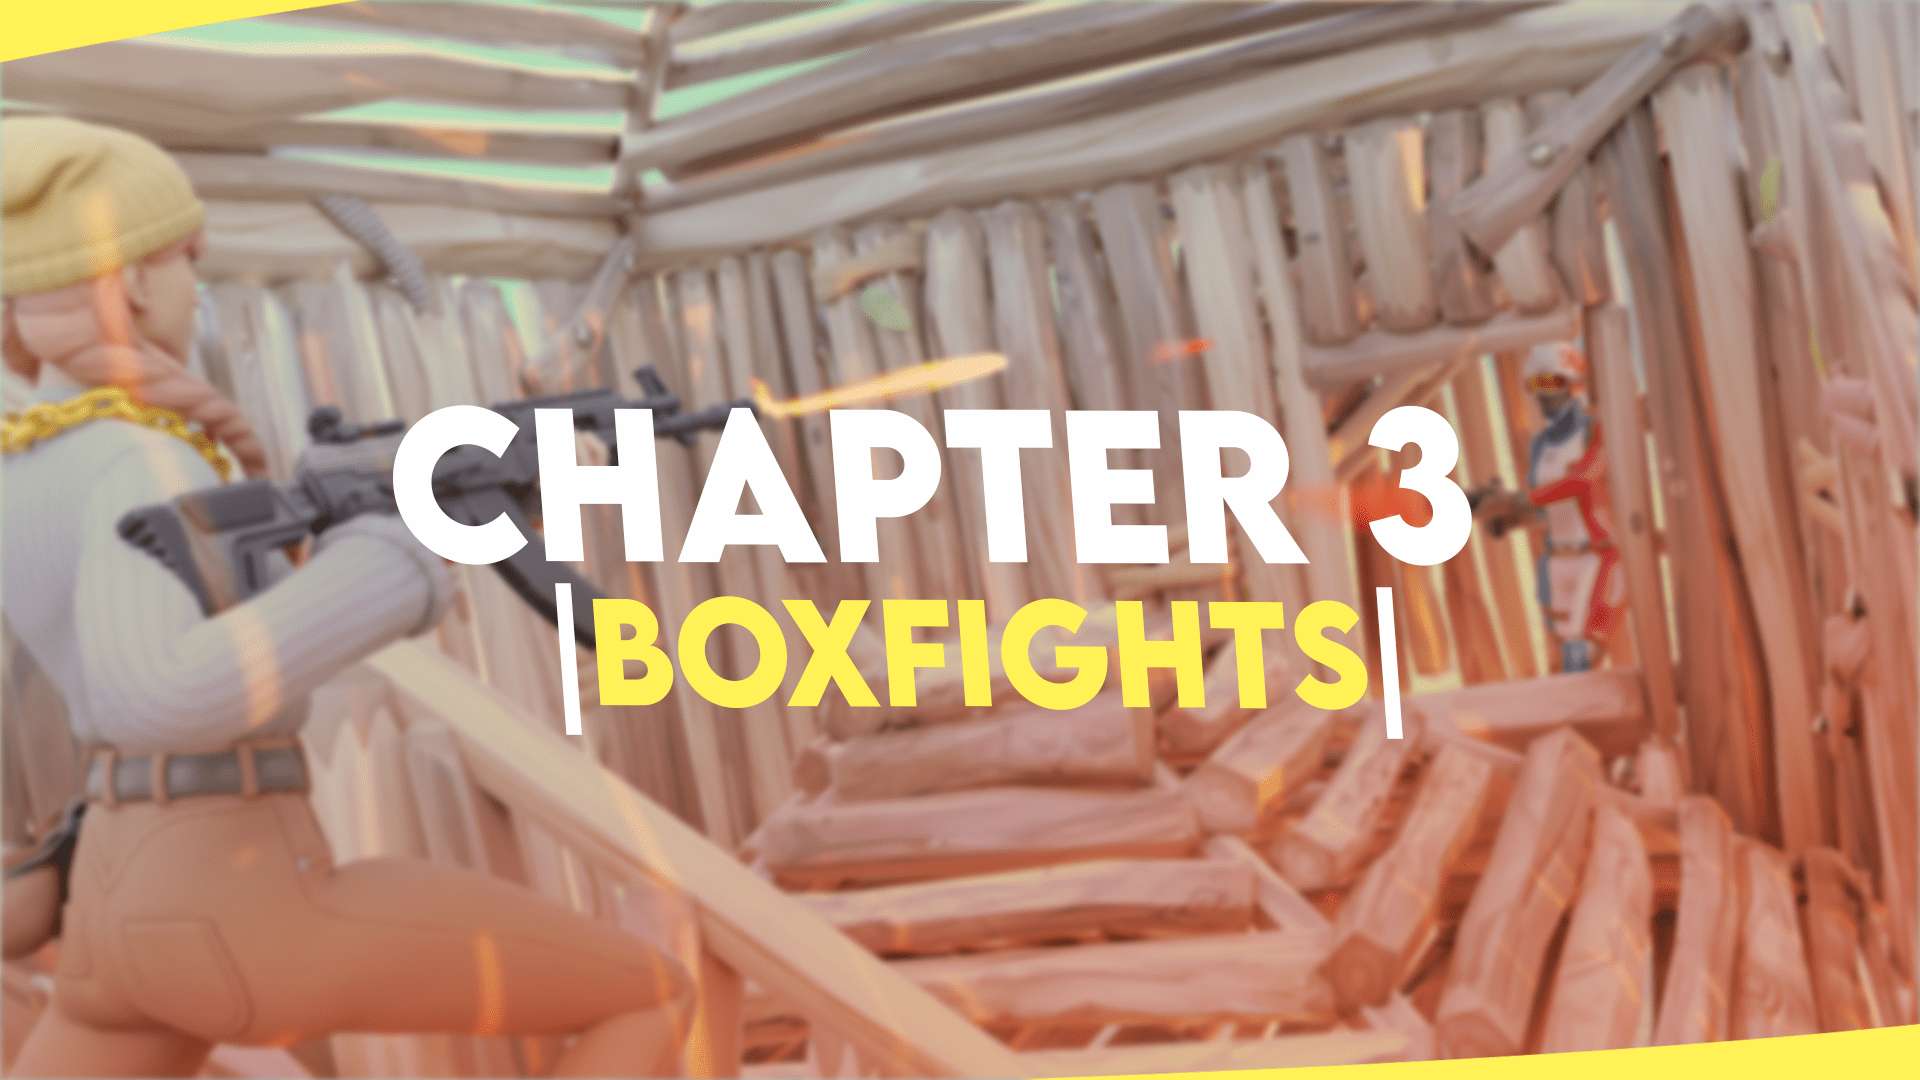 CHAPTER 3 |16 PLAYER| BOXFIGHTS